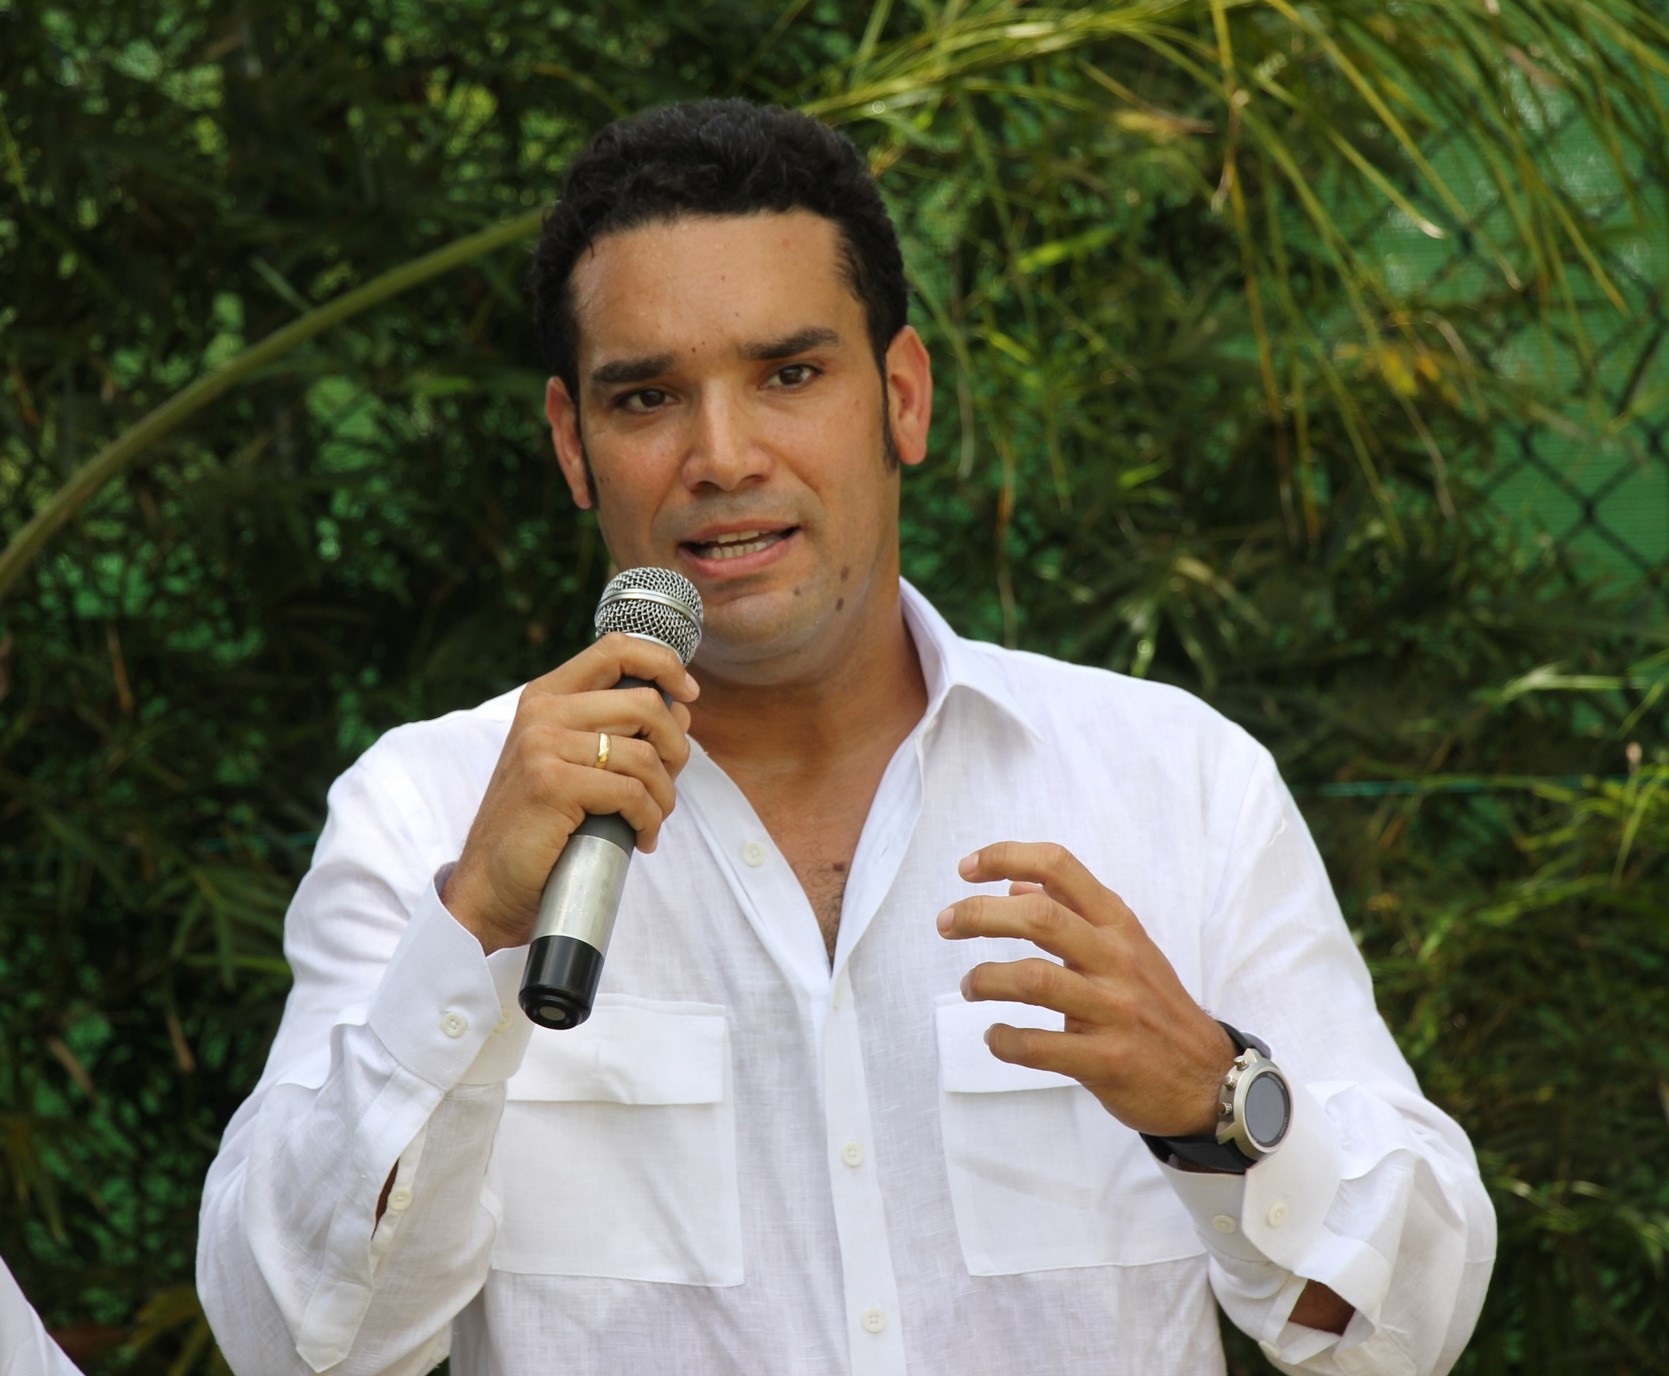 Luis Ramon Salcedo